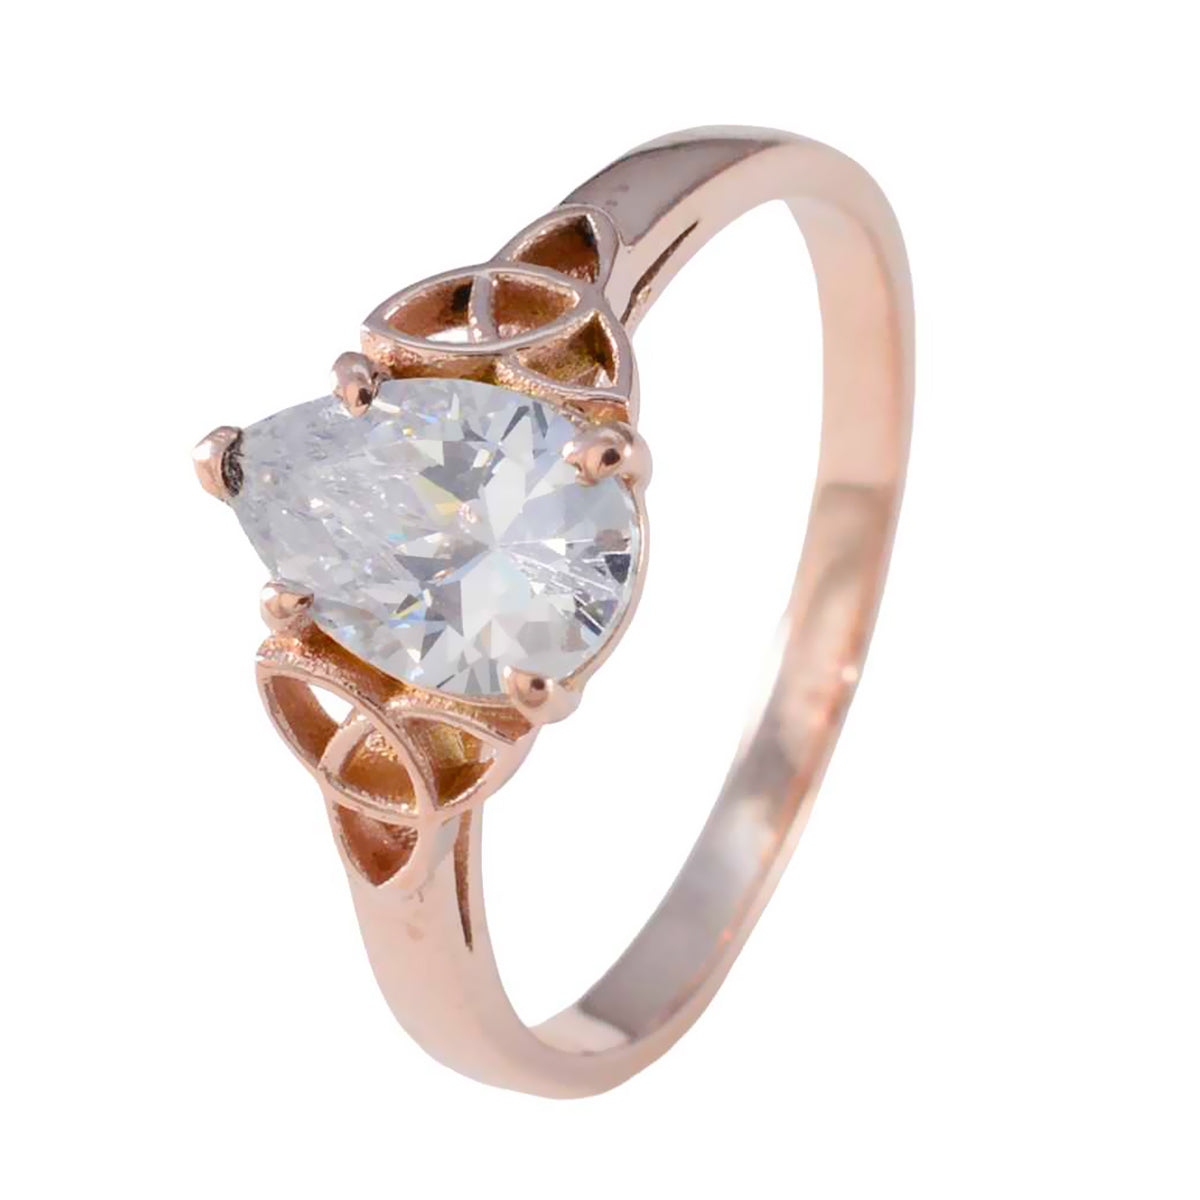 Riyo Elegant Silver Ring With Rose Gold Plating White CZ Stone Pear Shape Prong Setting Fashion Jewelry Thanksgiving Ring